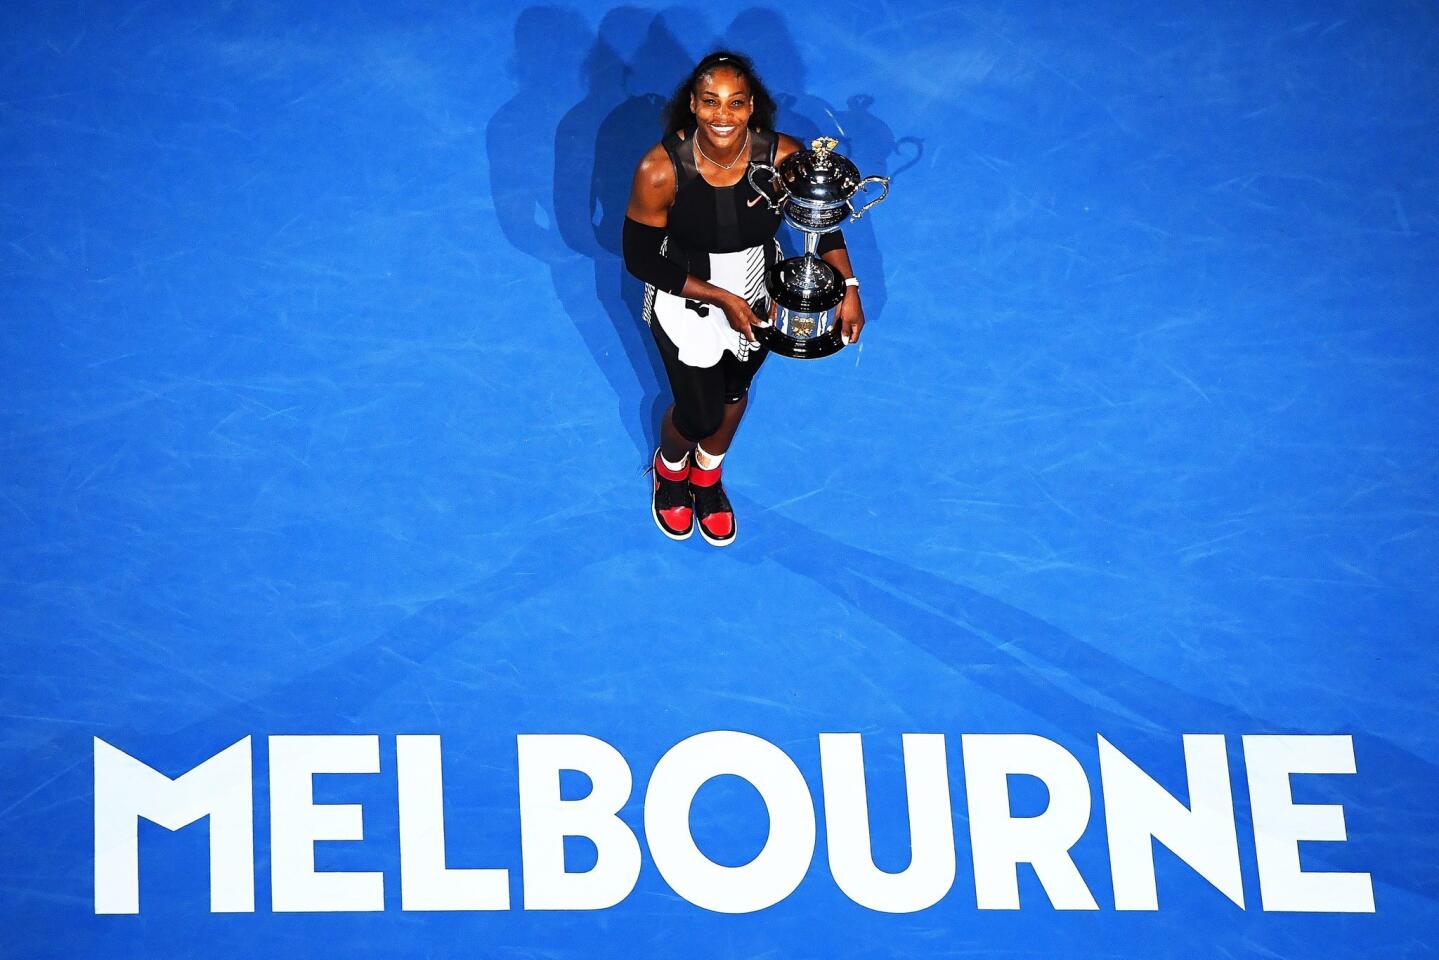 La tenista Serena Williams posa con el trofeo que la acredita monarca del Australian Open Grand Slam.